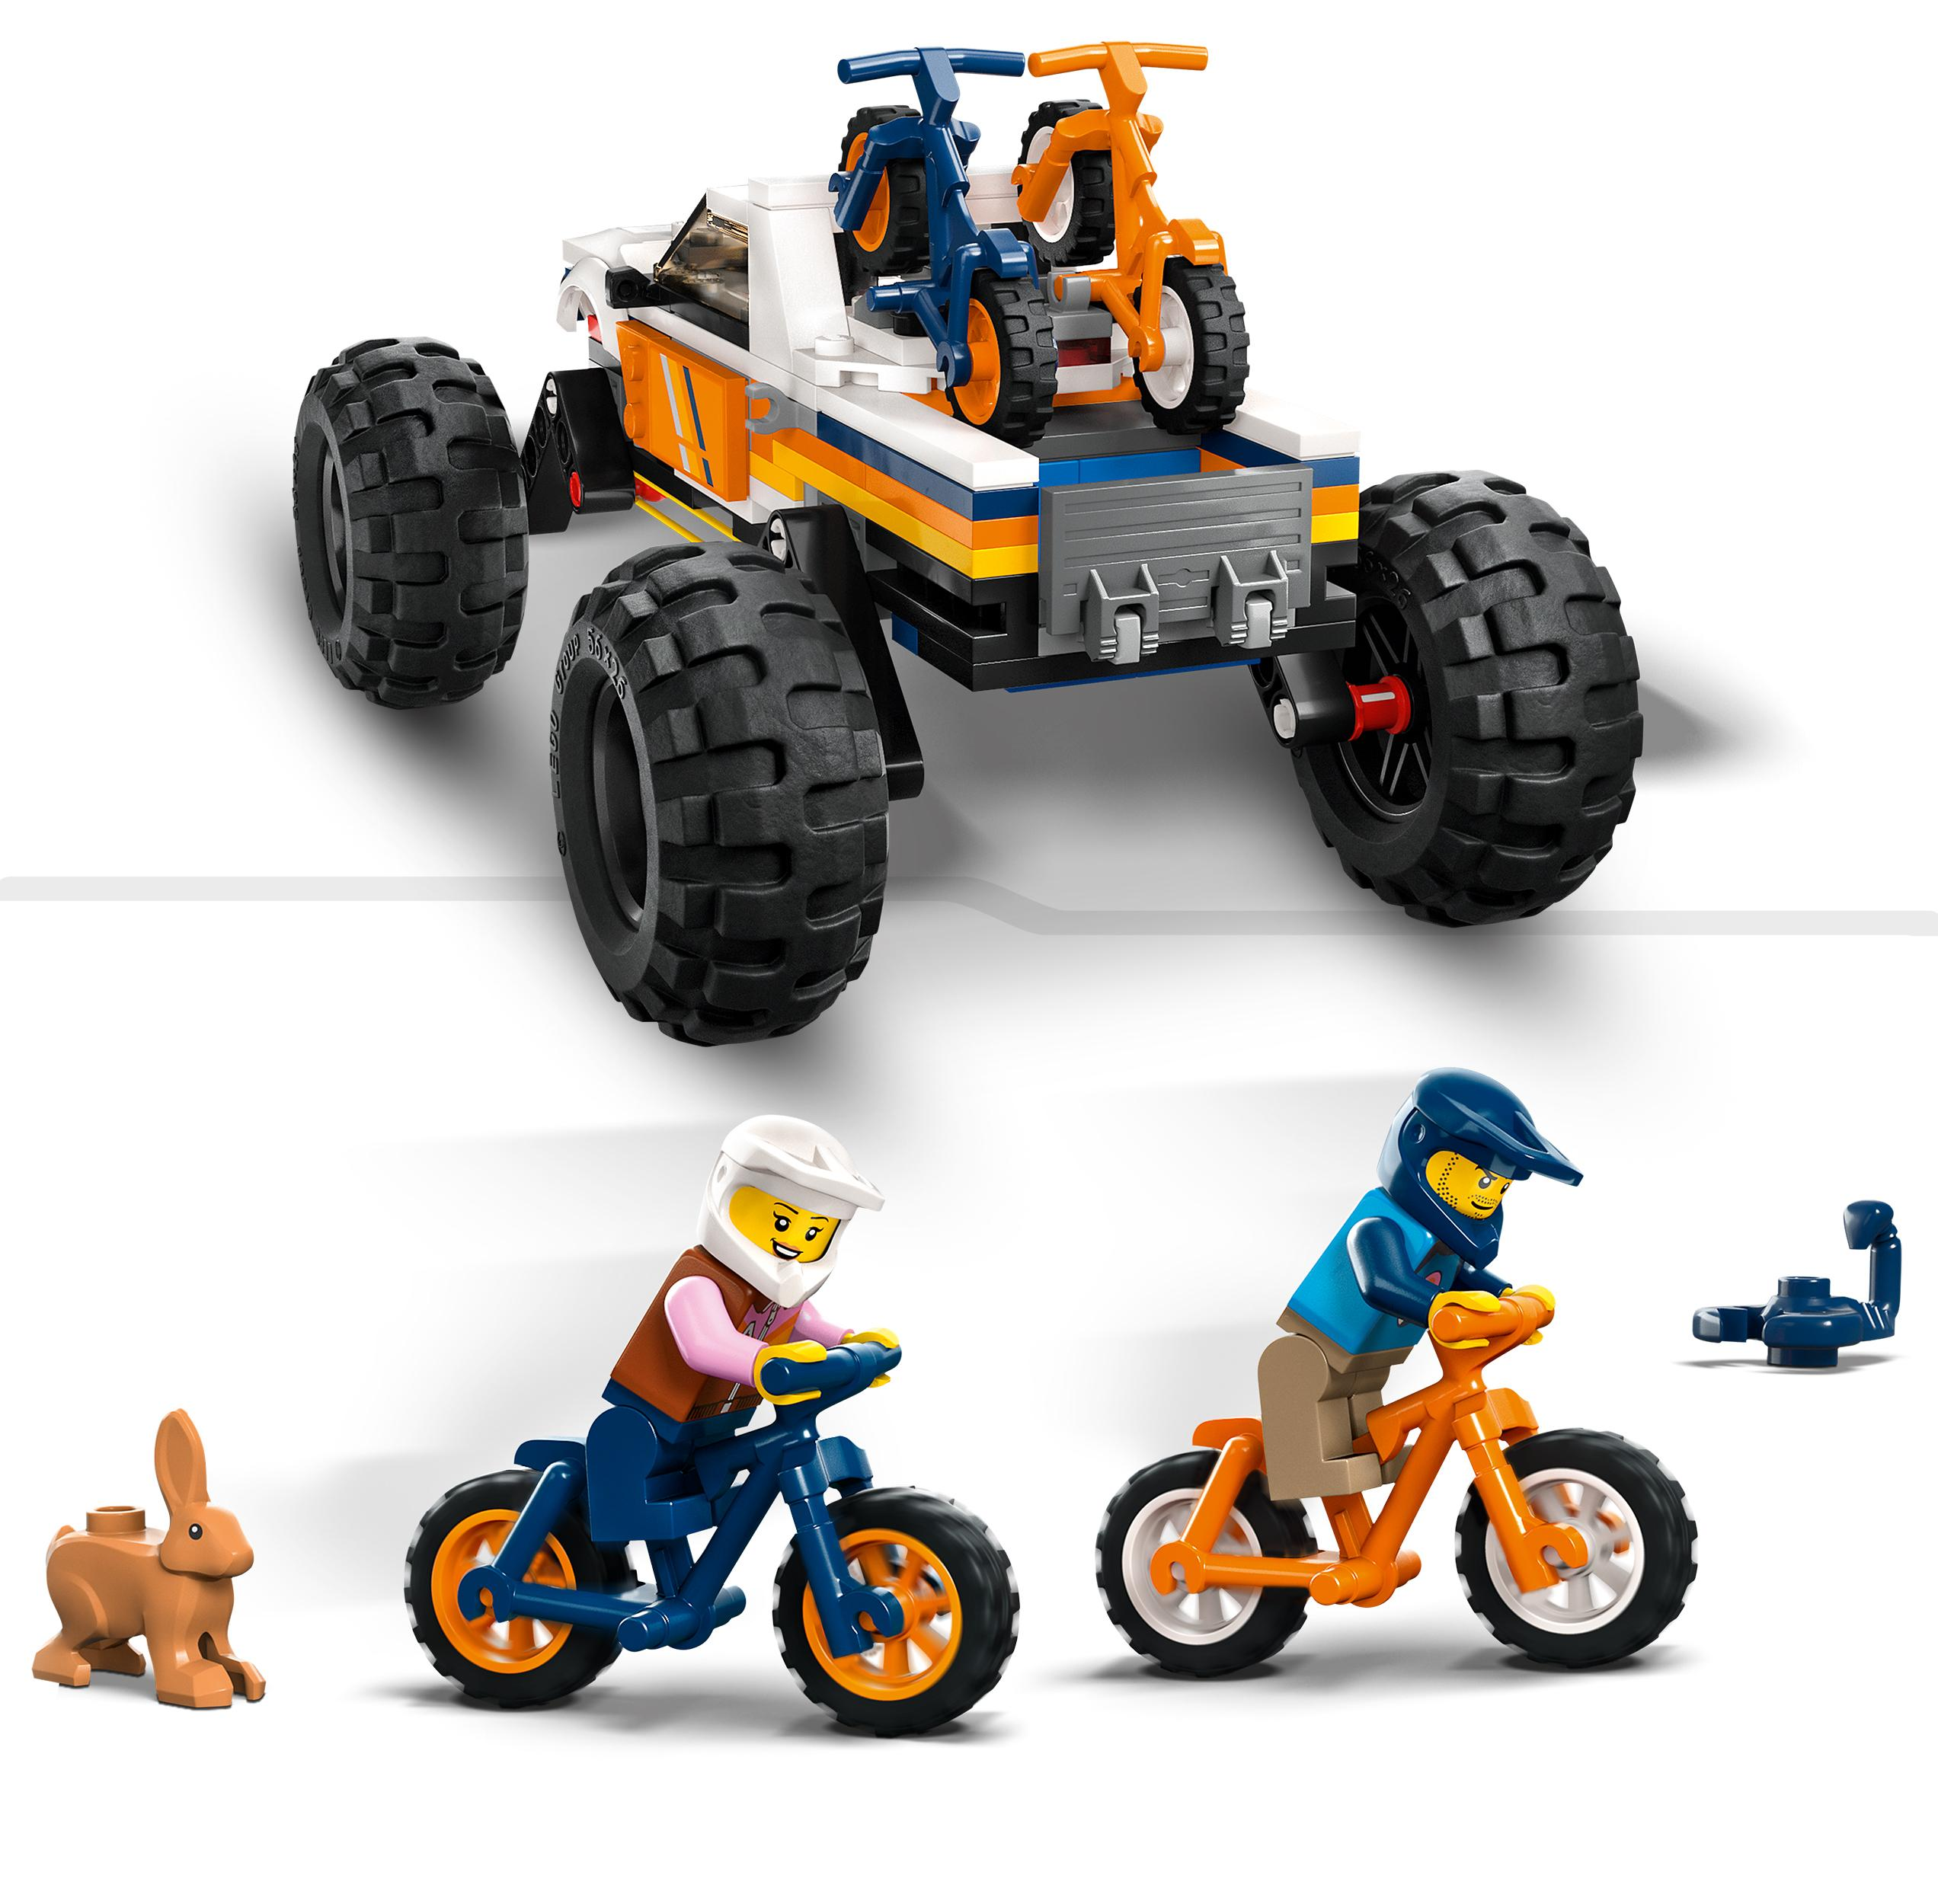 City 60387 Bausatz, Mehrfarbig Abenteuer Offroad LEGO